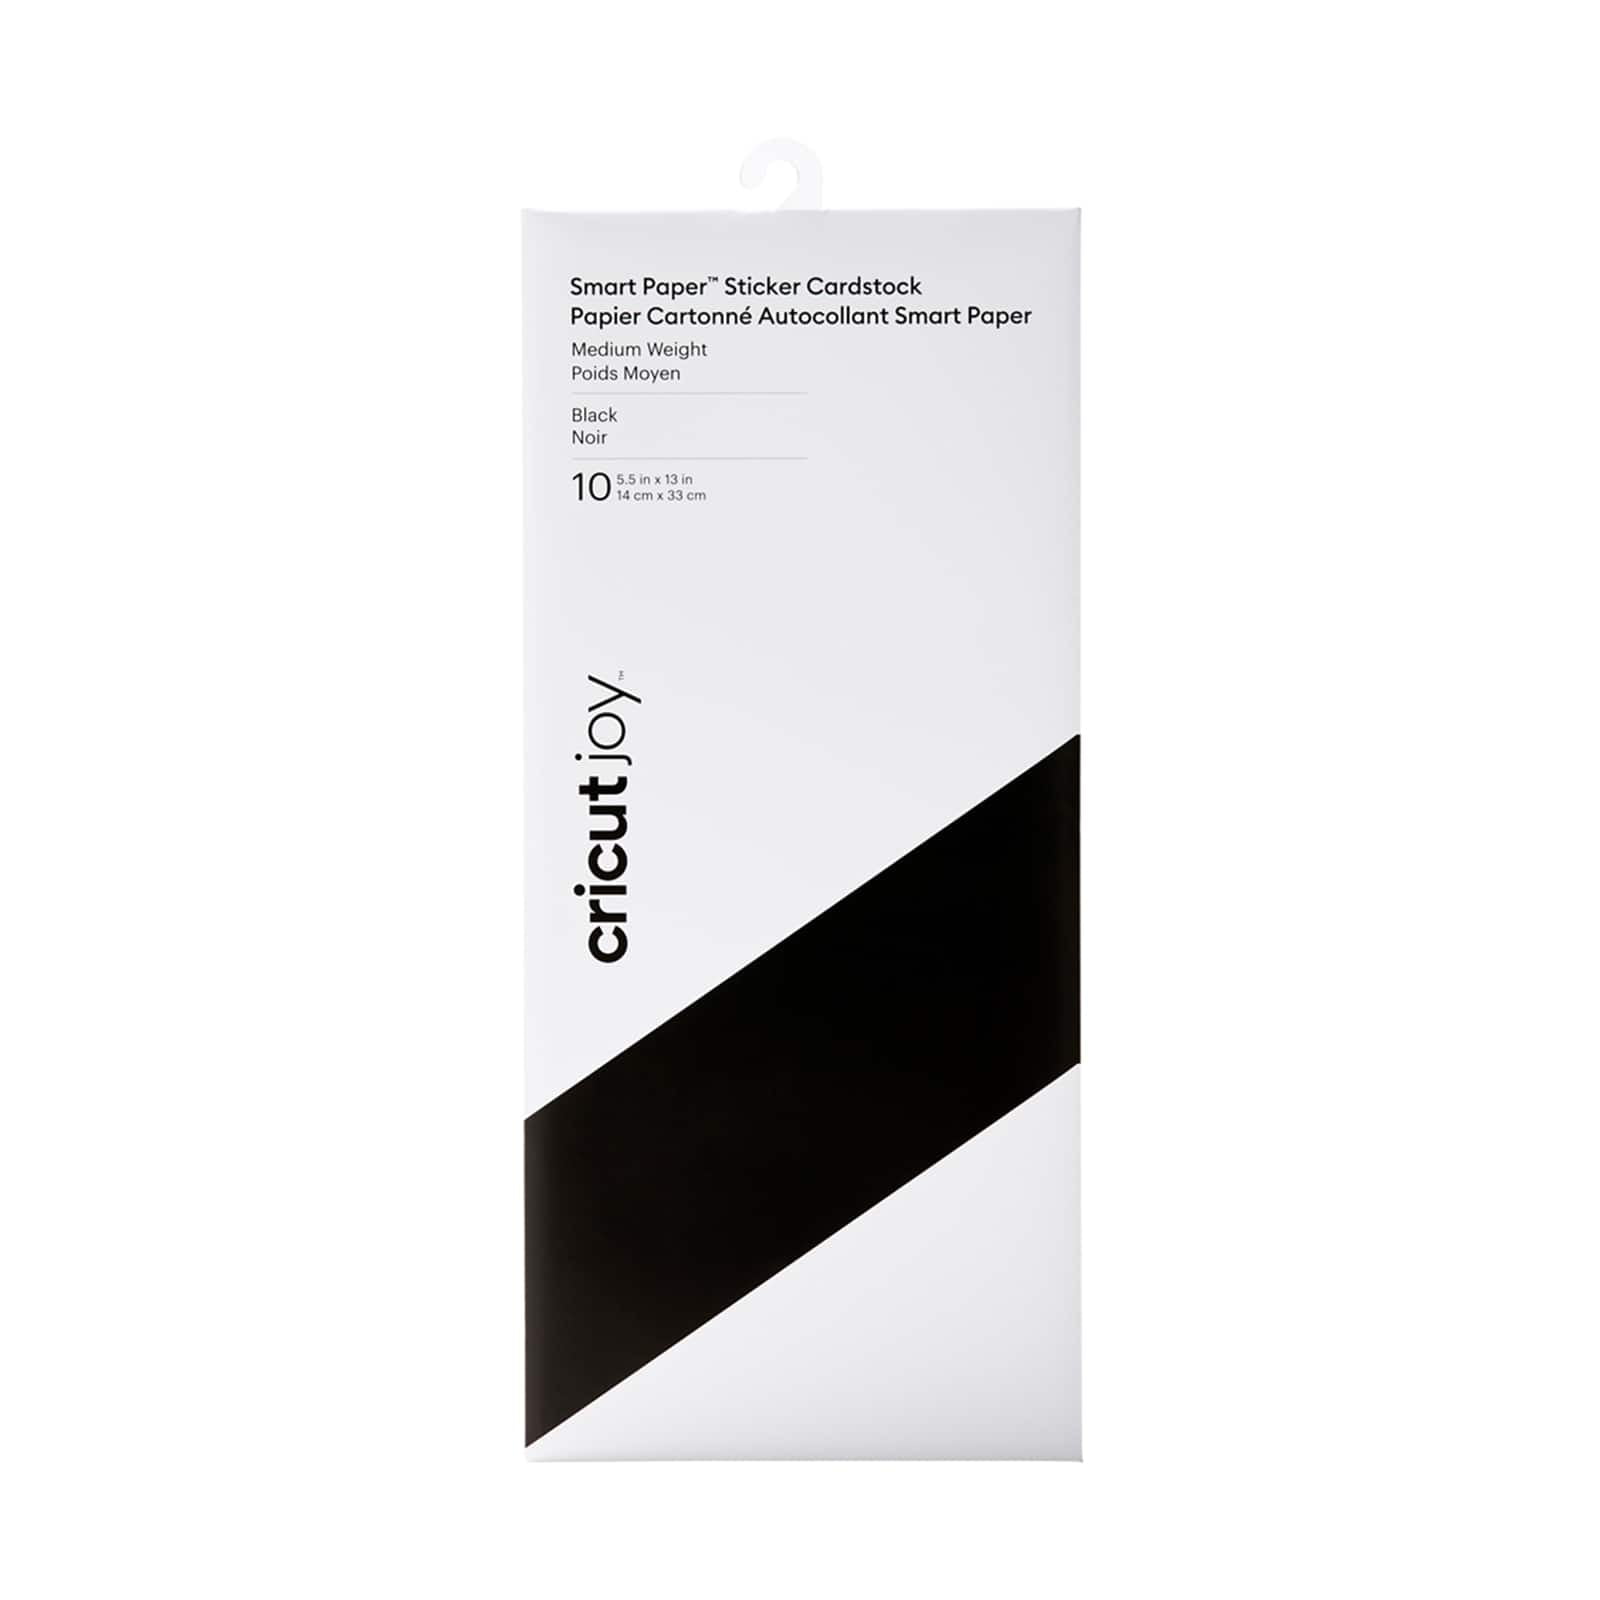 Cricut Joy Smart Paper Sticker Cardstock PASTELS SAMPLER